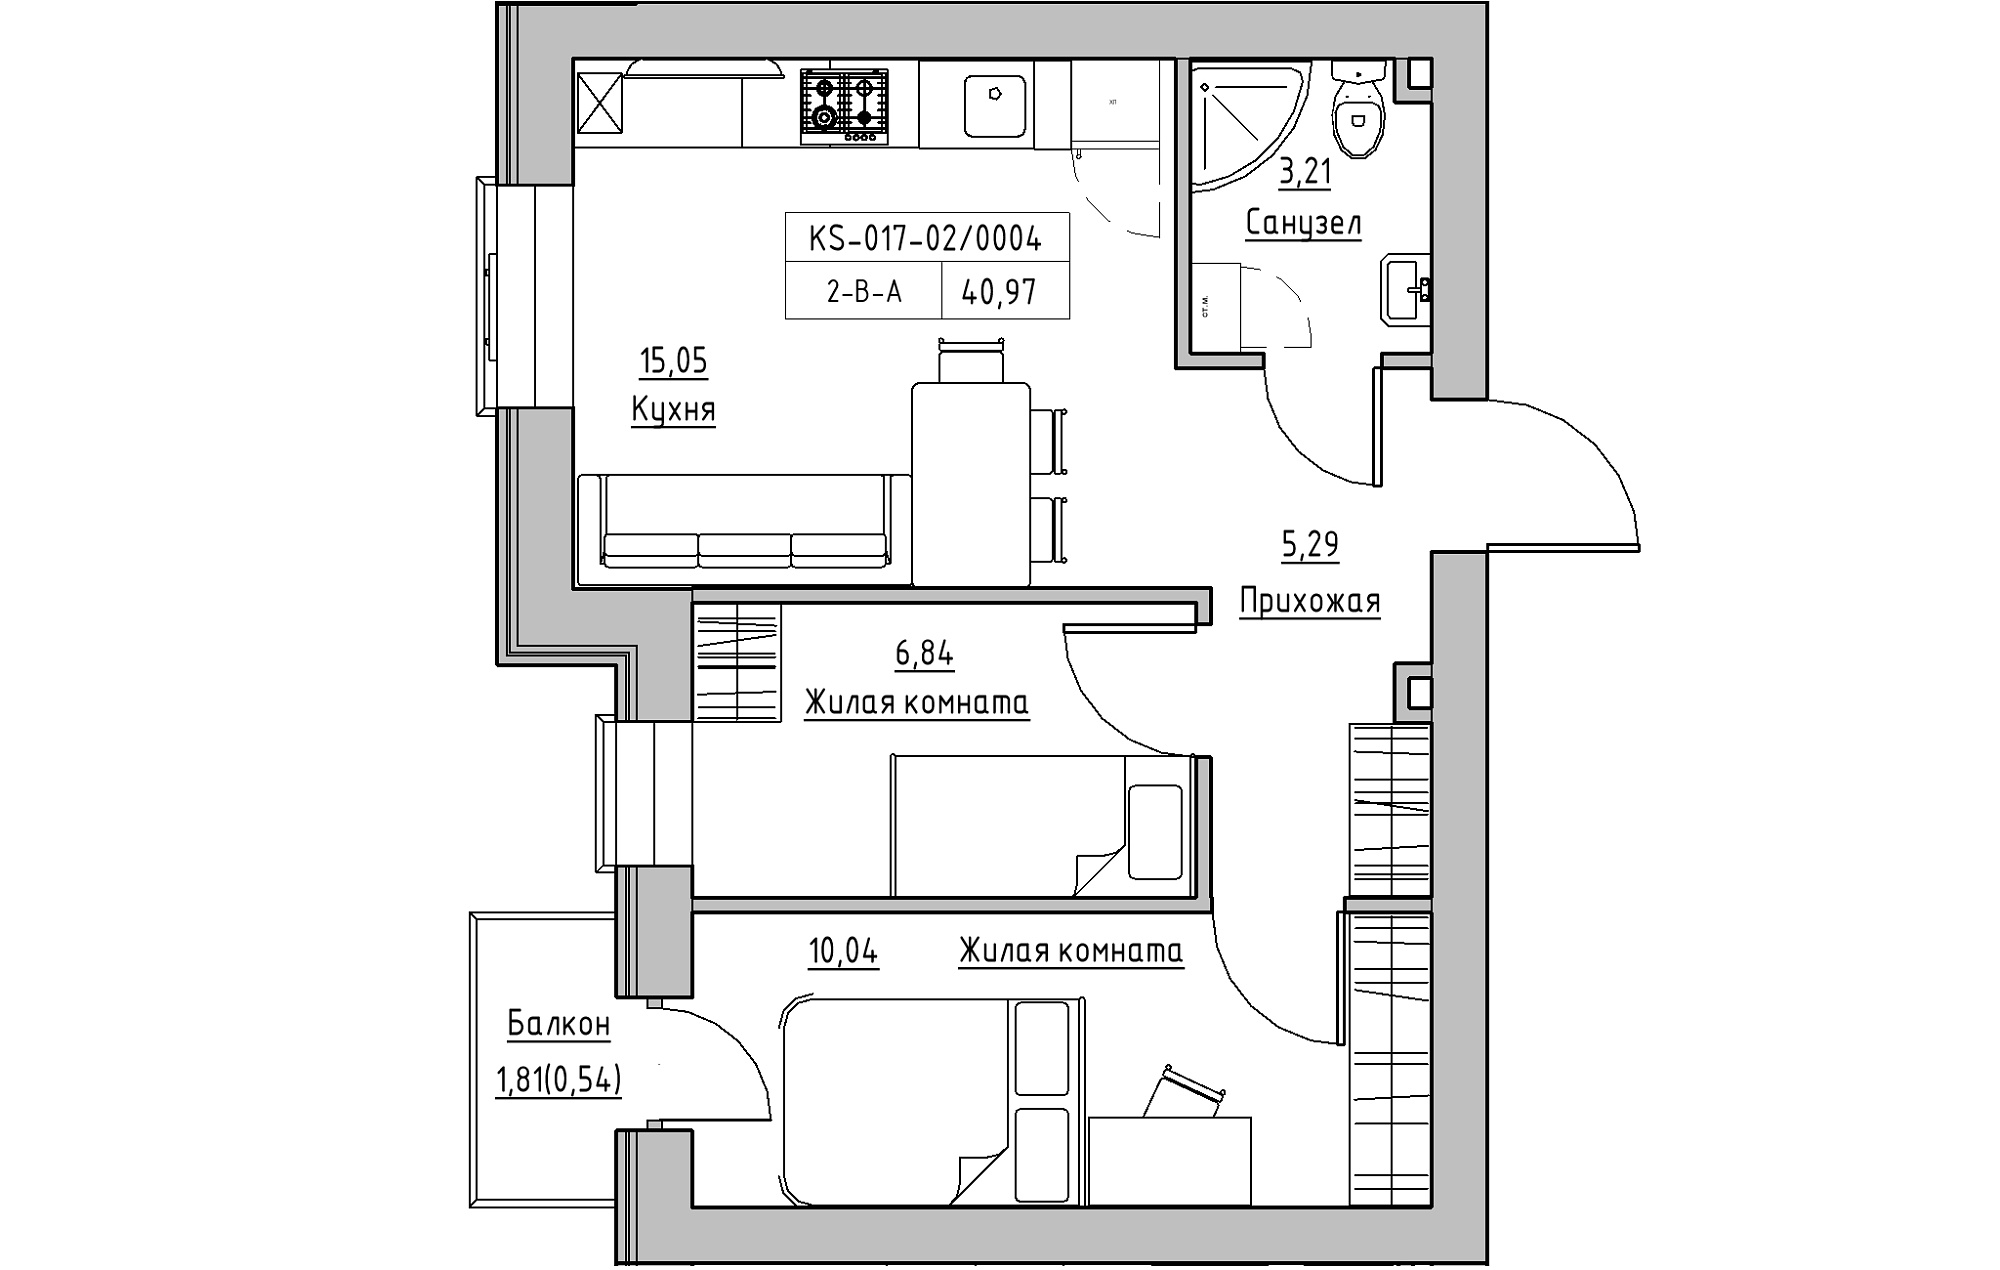 Planning 2-rm flats area 40.97m2, KS-017-02/0004.